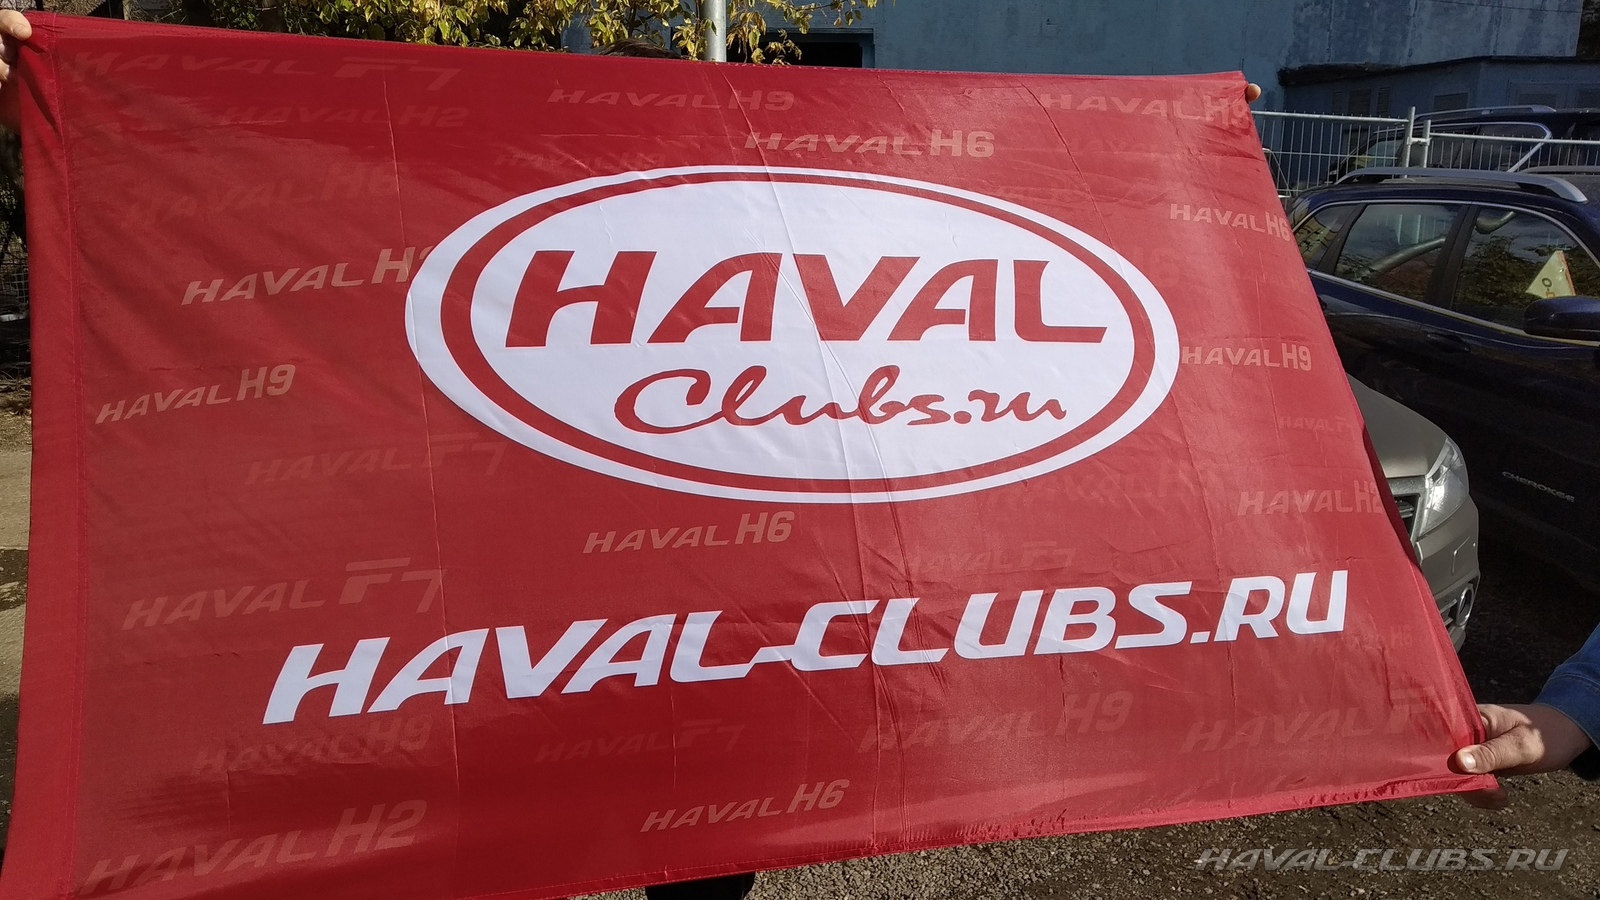 Haval Club / Хавал Клуб